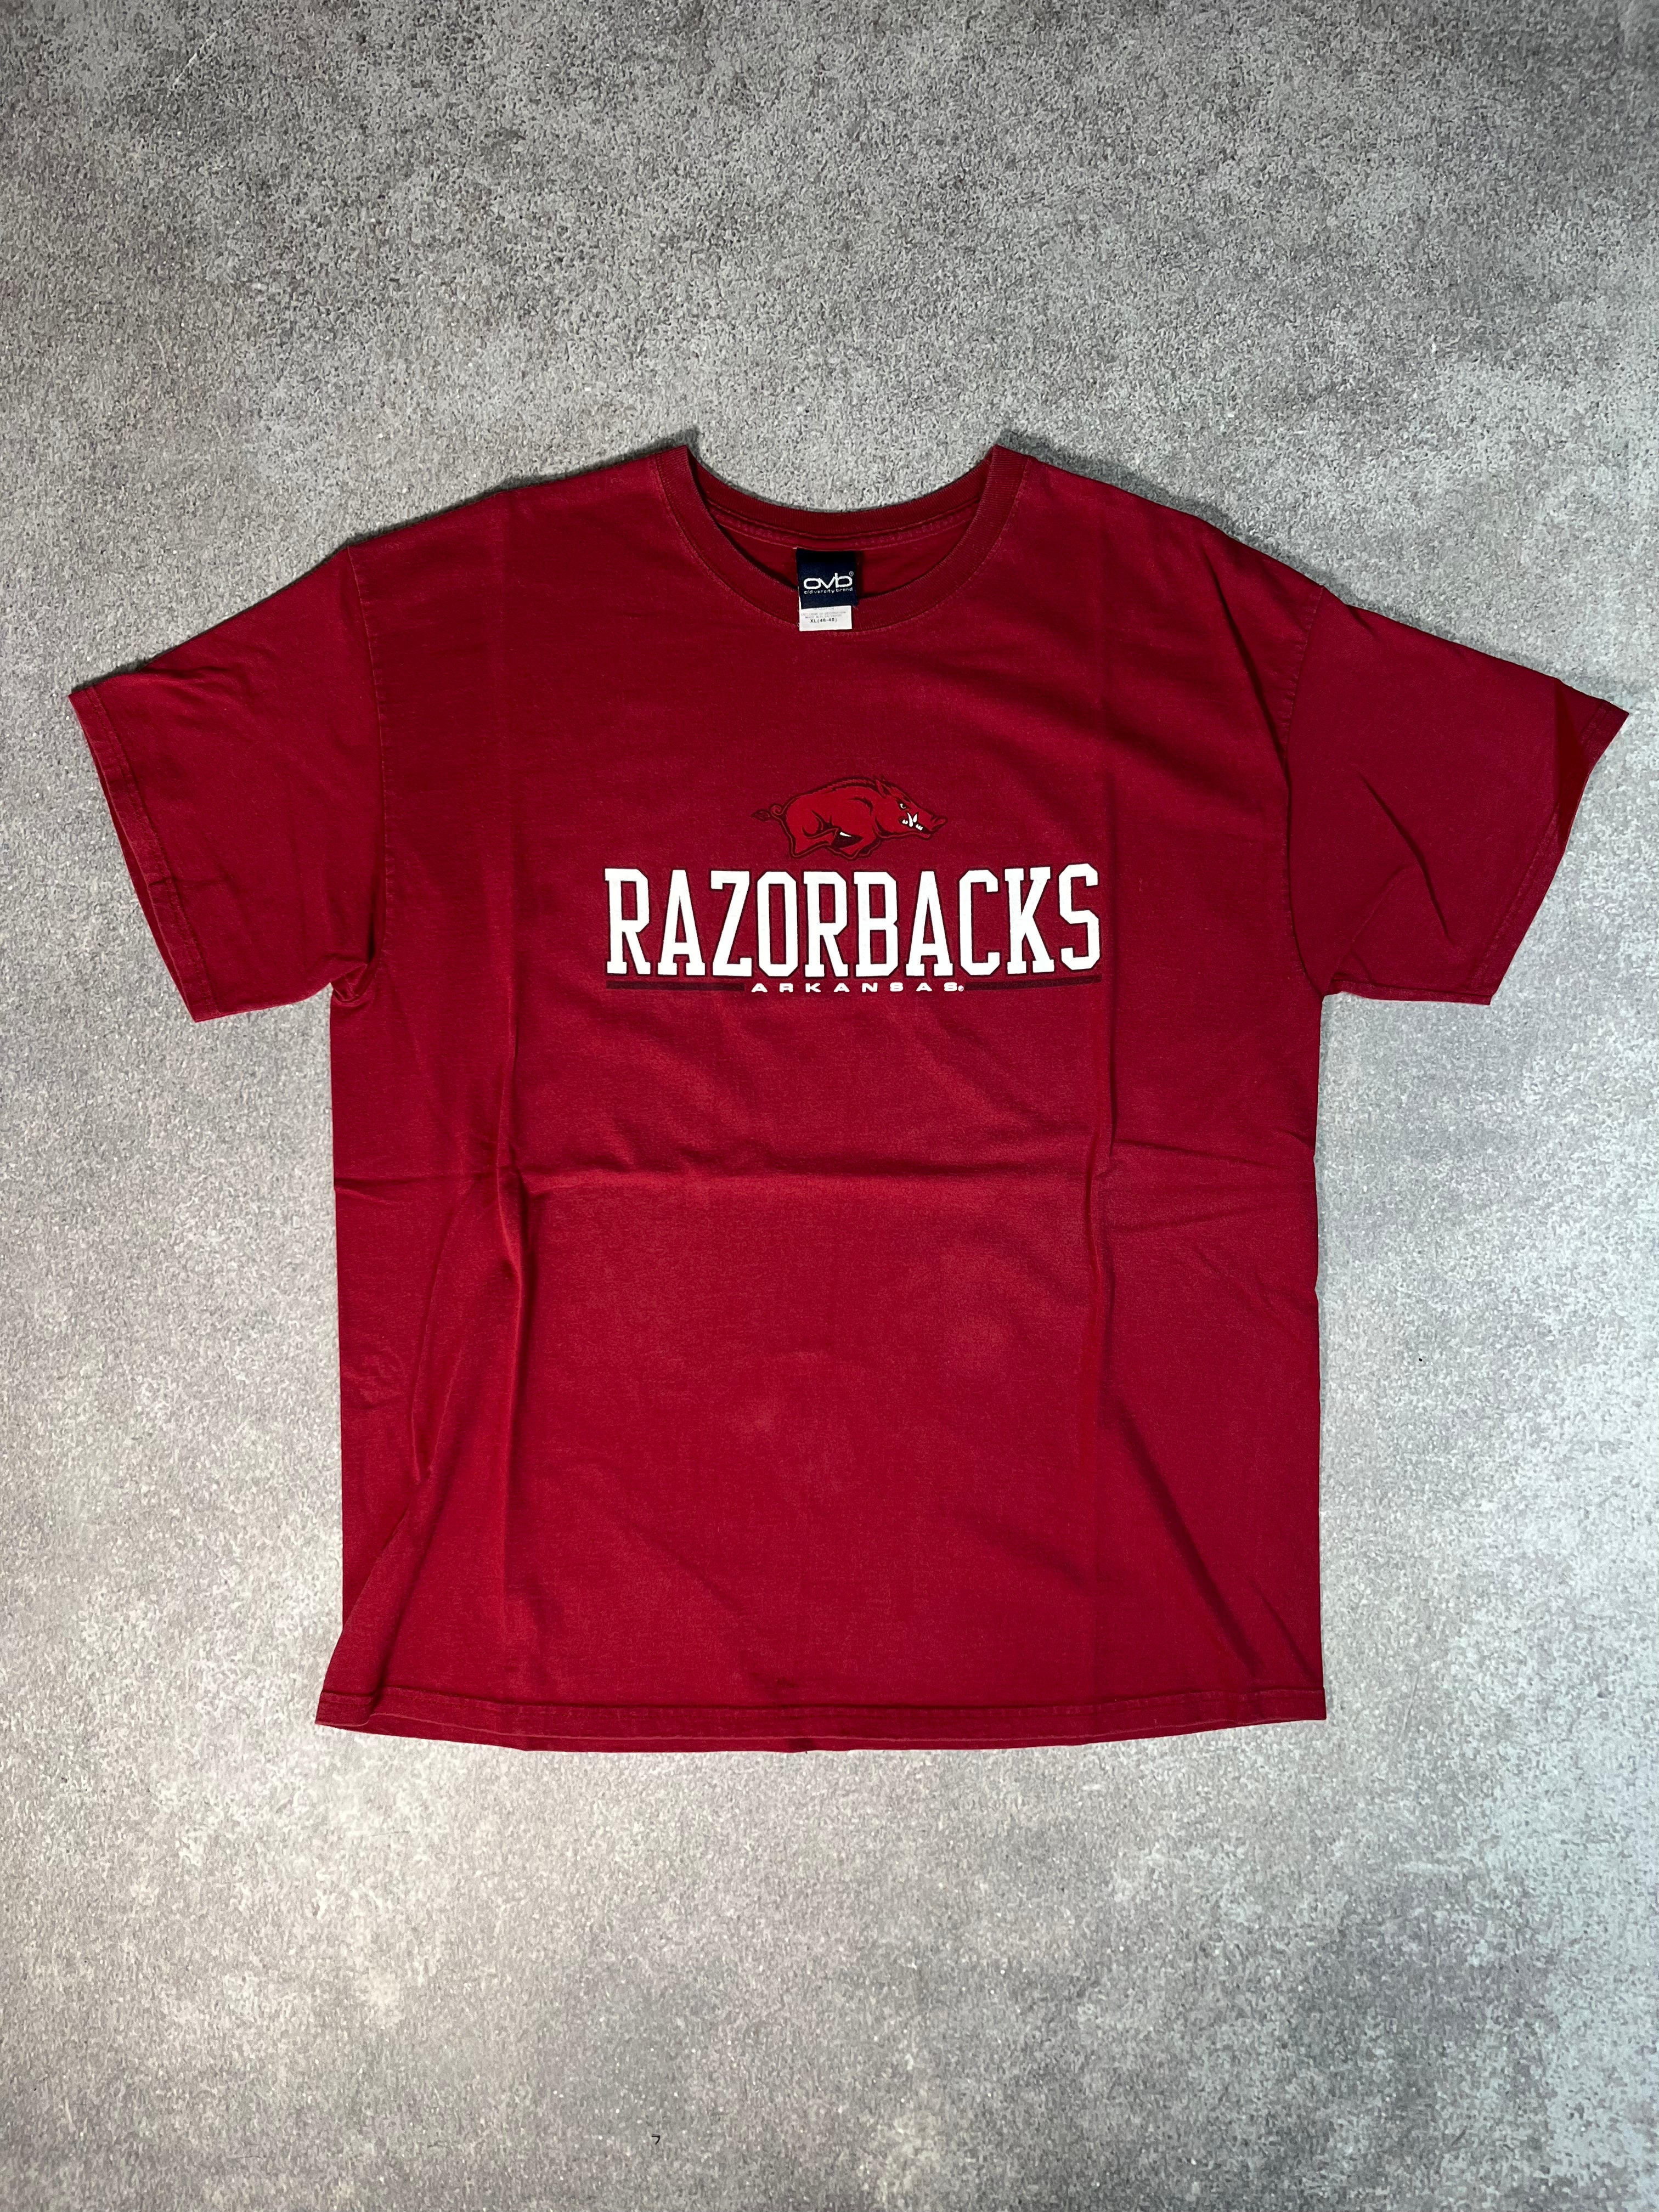 Razorbacks Arkansas Shirt Red // X-Large - RHAGHOUSE VINTAGE